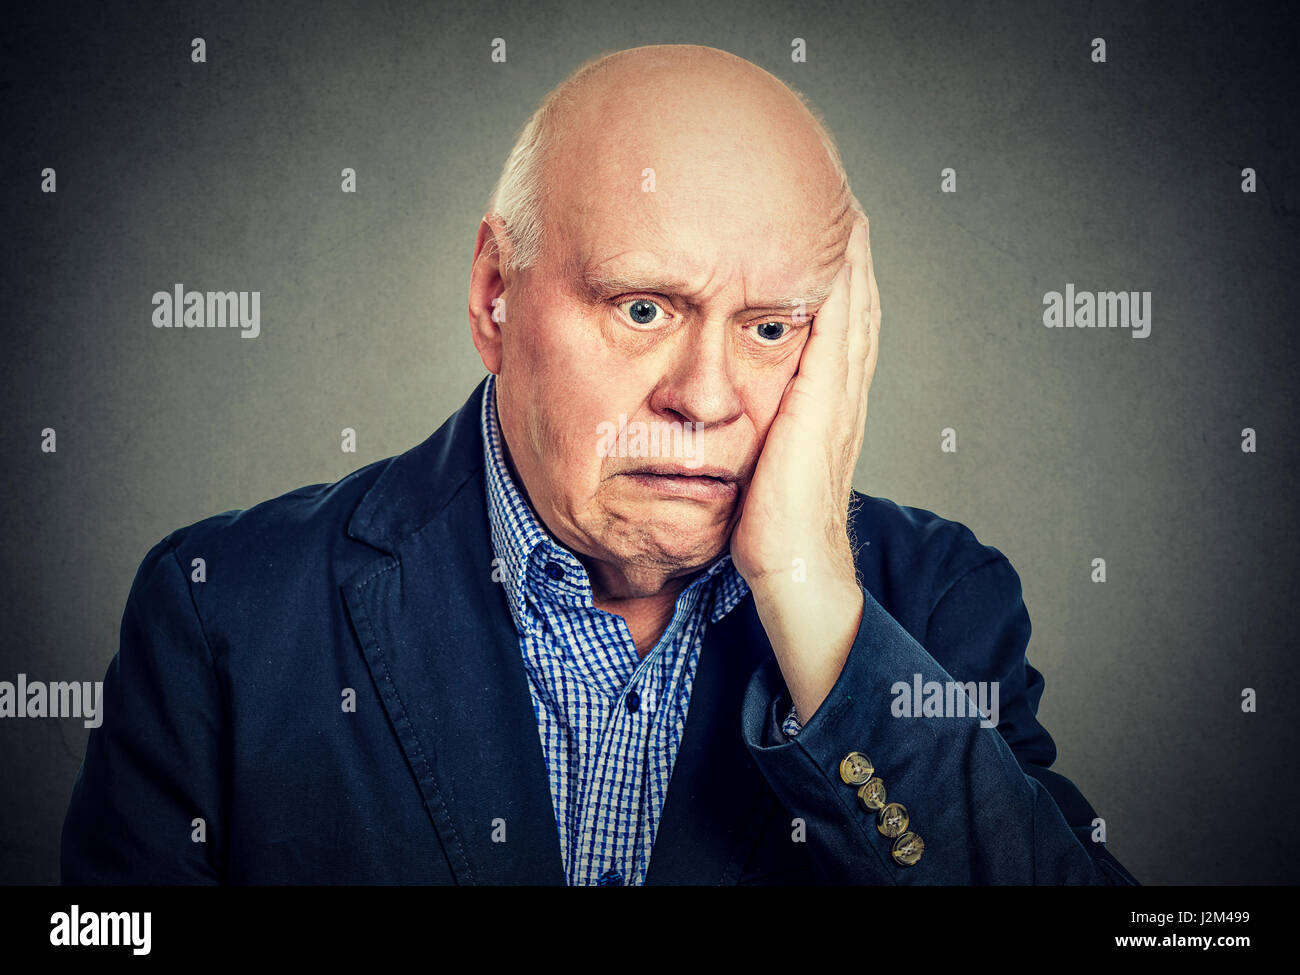 portrait of elderly desperate sad man Stock Photo